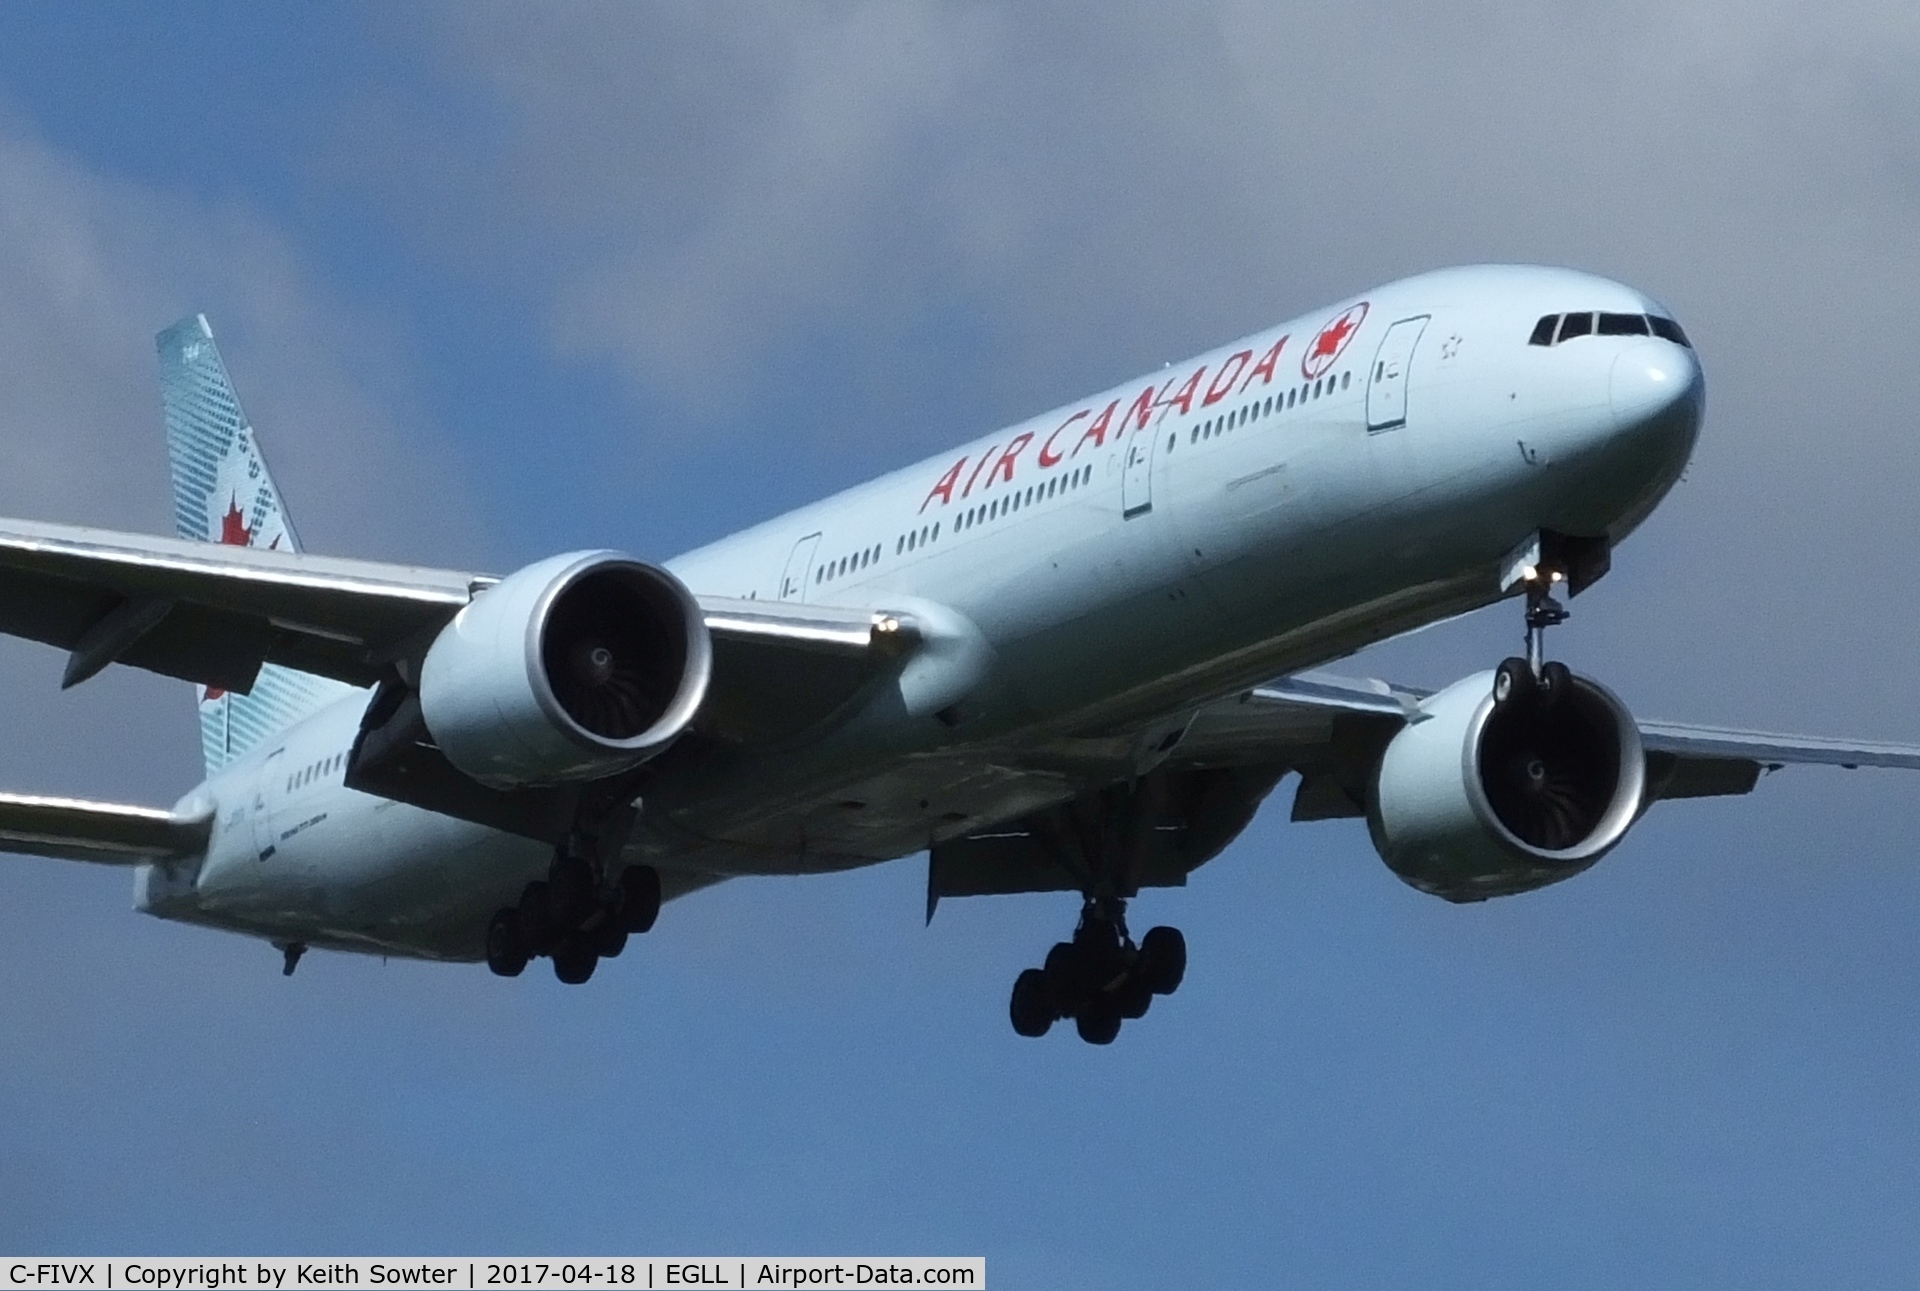 C-FIVX, 2013 Boeing 777-333/ER C/N 42219, Short finals to land on runway 09L at Heathrow